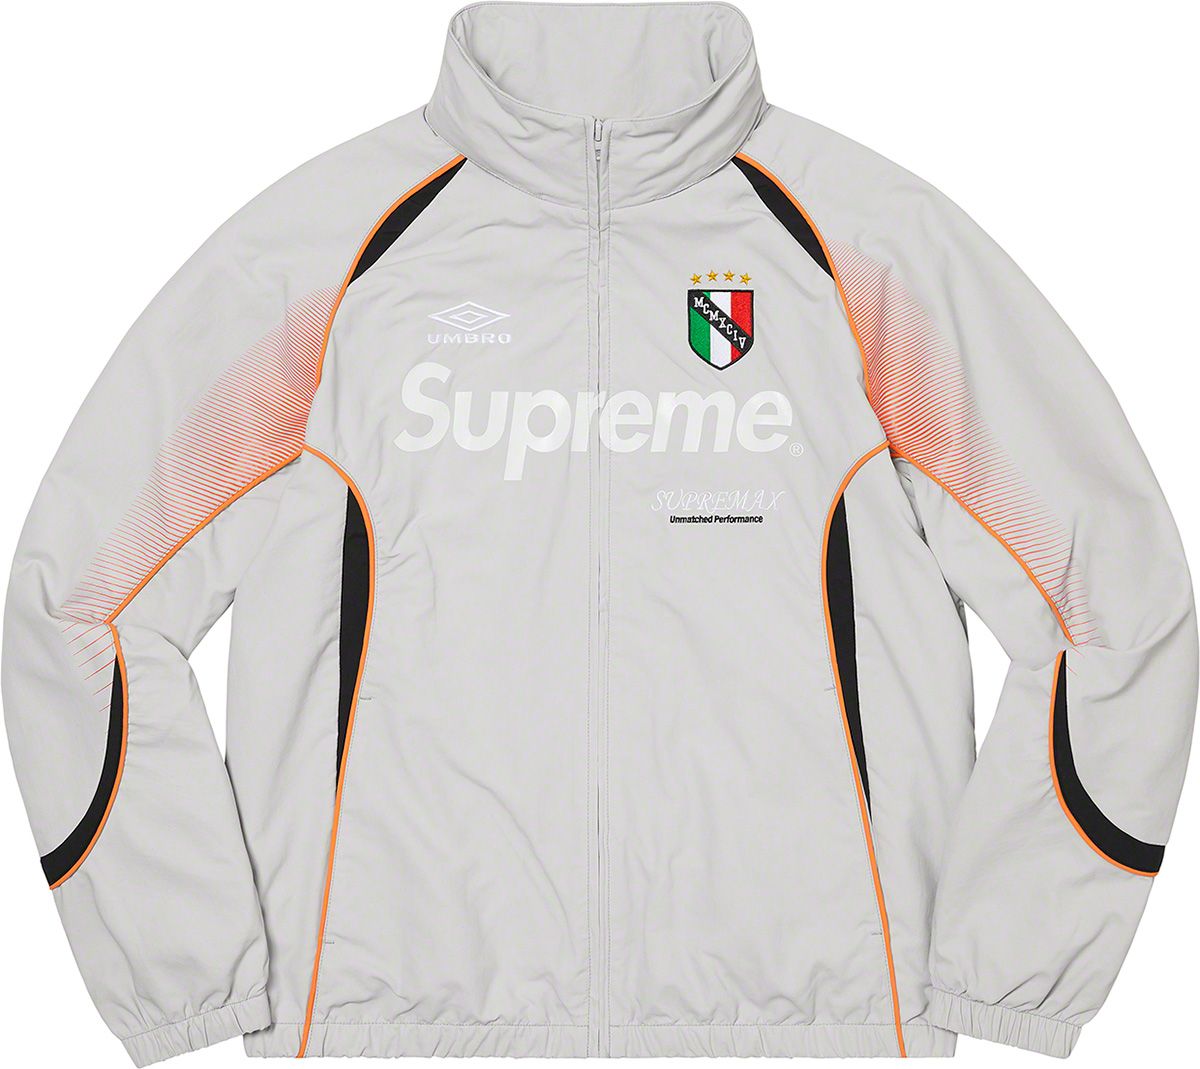 Supreme®/Umbro Track Jacket – Supreme